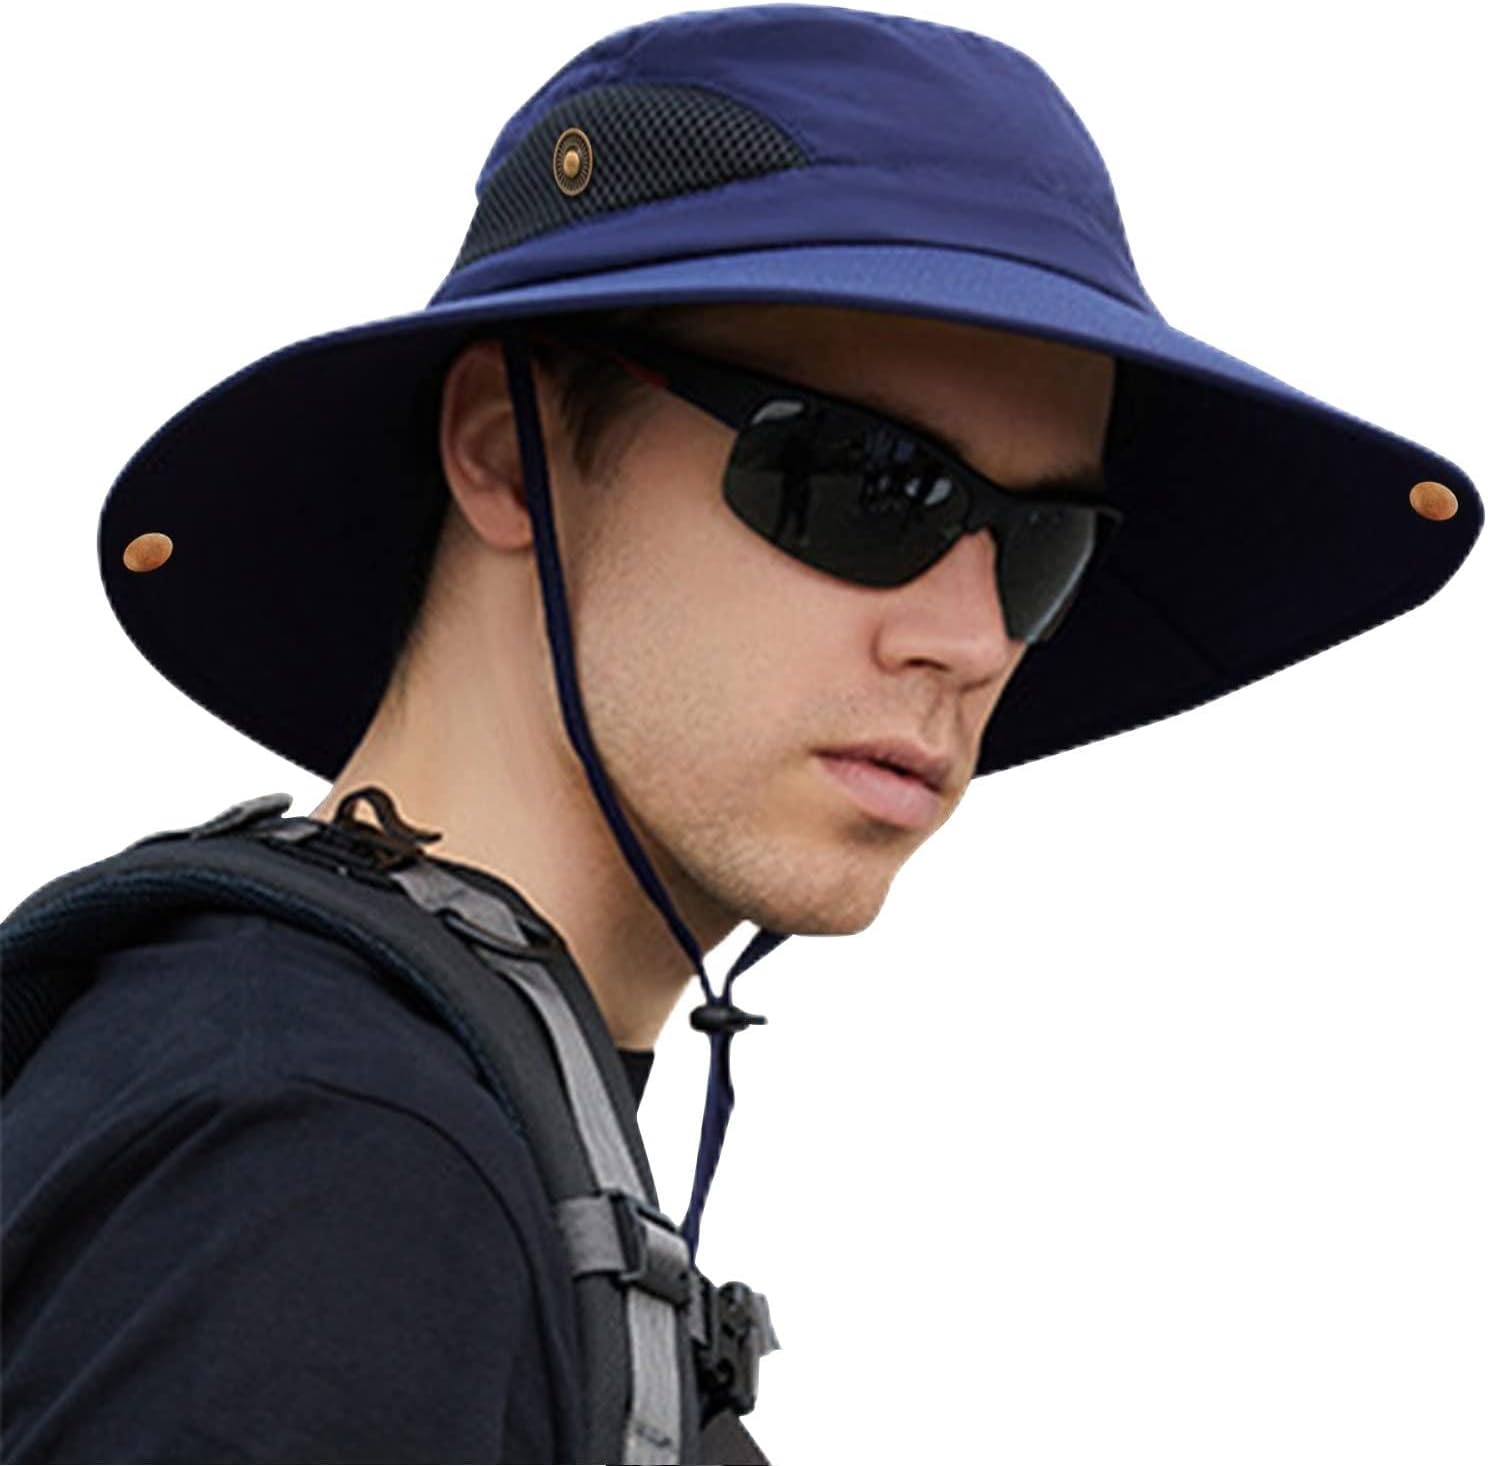 ZOORON Sun Hat for Men Women, Wide Brim Bucket Hat UV Protection UPF50+ Waterproof Boonie Hat for Fishing Hiking Camping